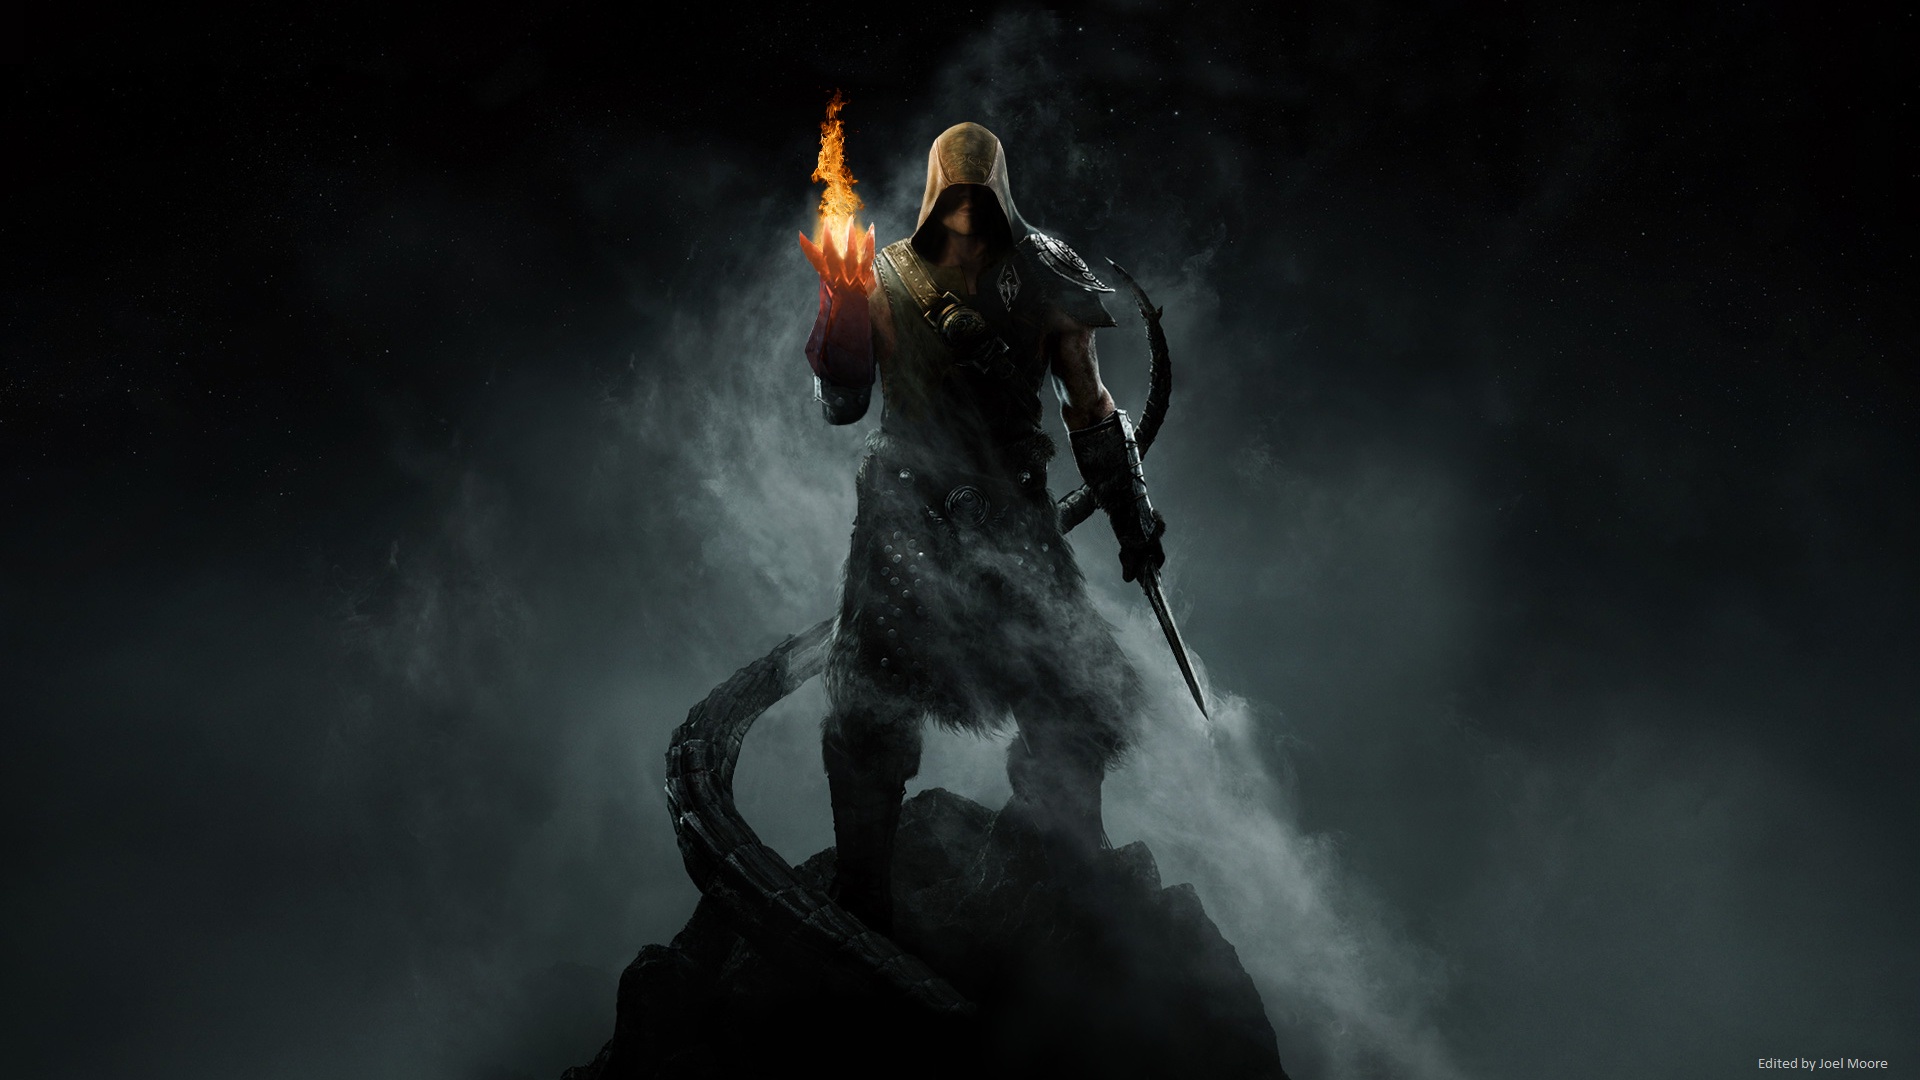 General 1920x1080 The Elder Scrolls V: Skyrim artwork fantasy art video games fire PC gaming video game art